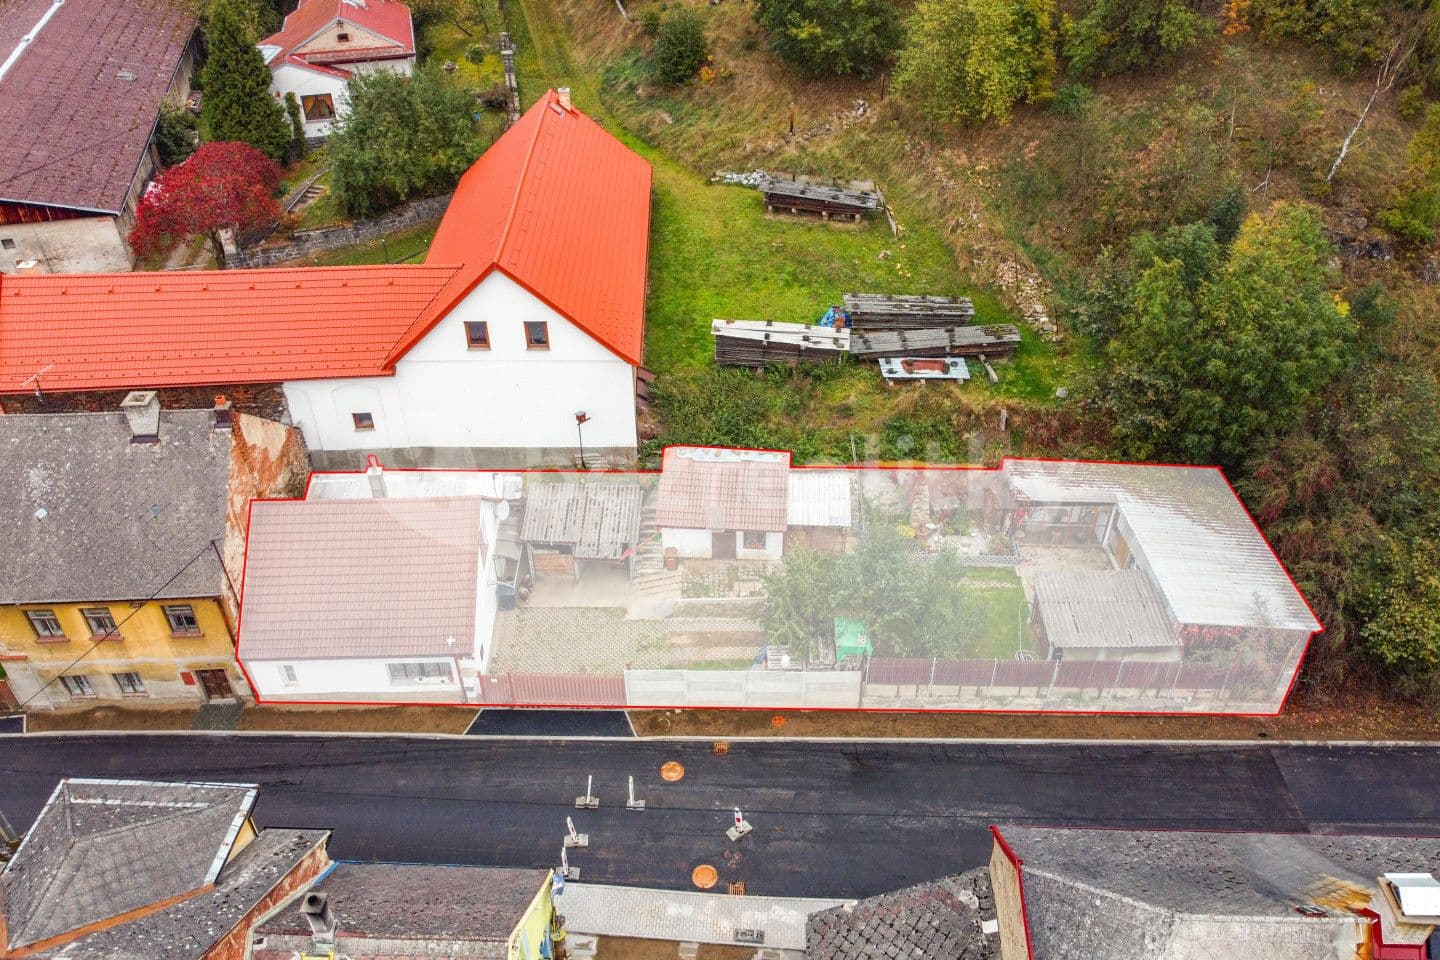 recreational property for sale, 193 m², Kolinec, Plzeňský Region